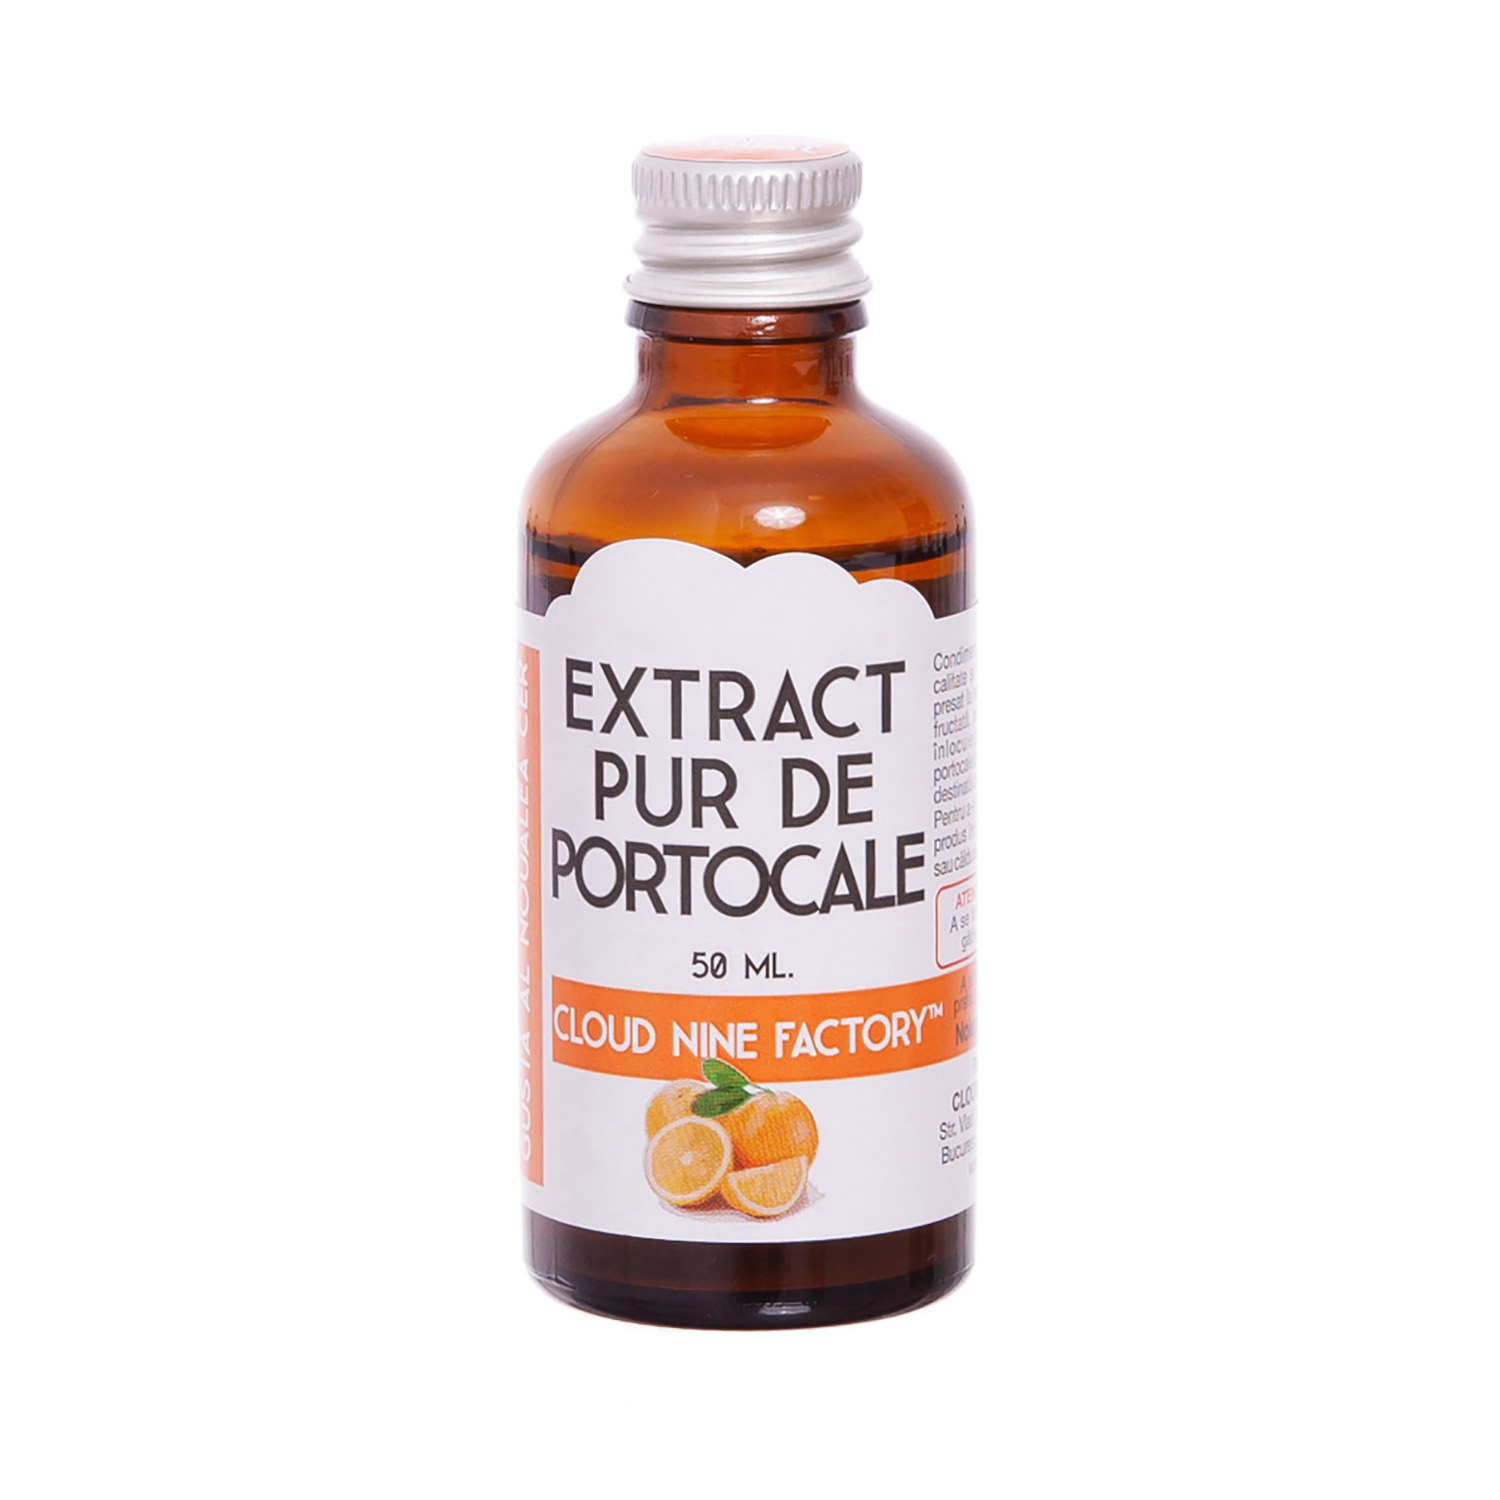 Extract pur de portocale, 50 ml, Cloud Nine Factory